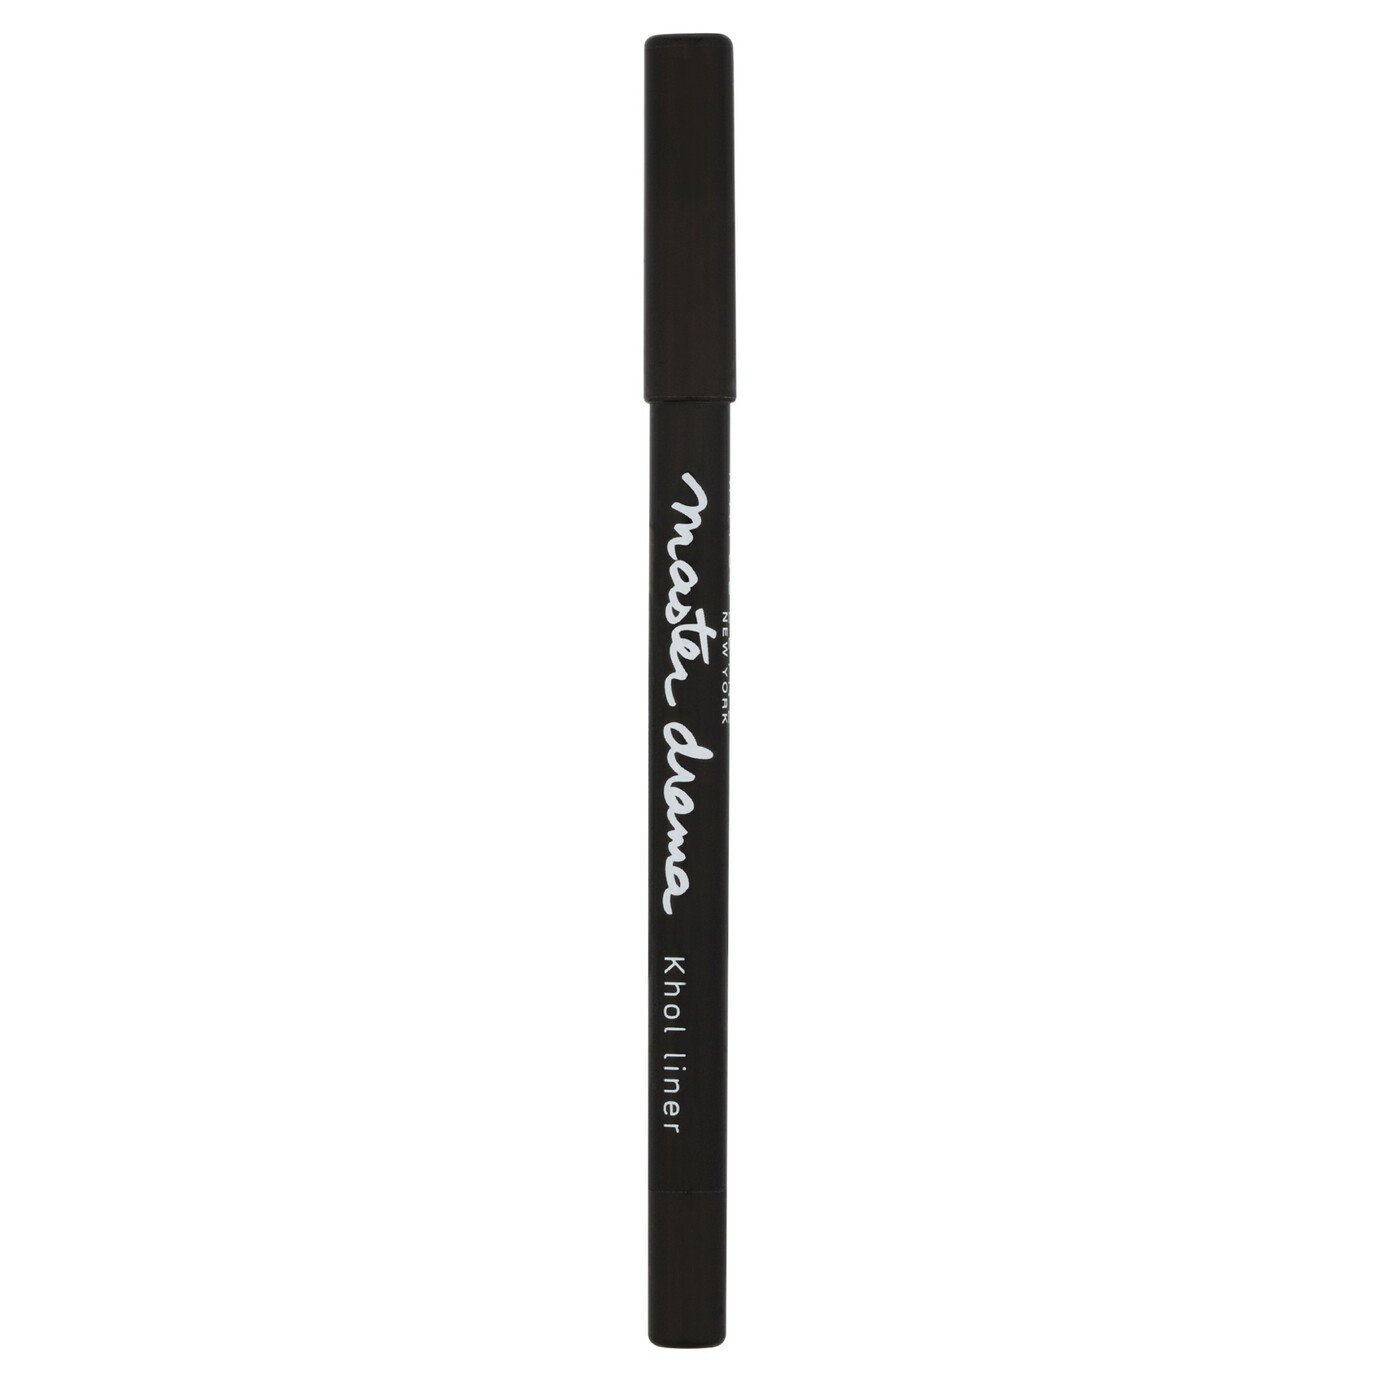 Maybelline Master Drama Eyeliner Pencil - Black